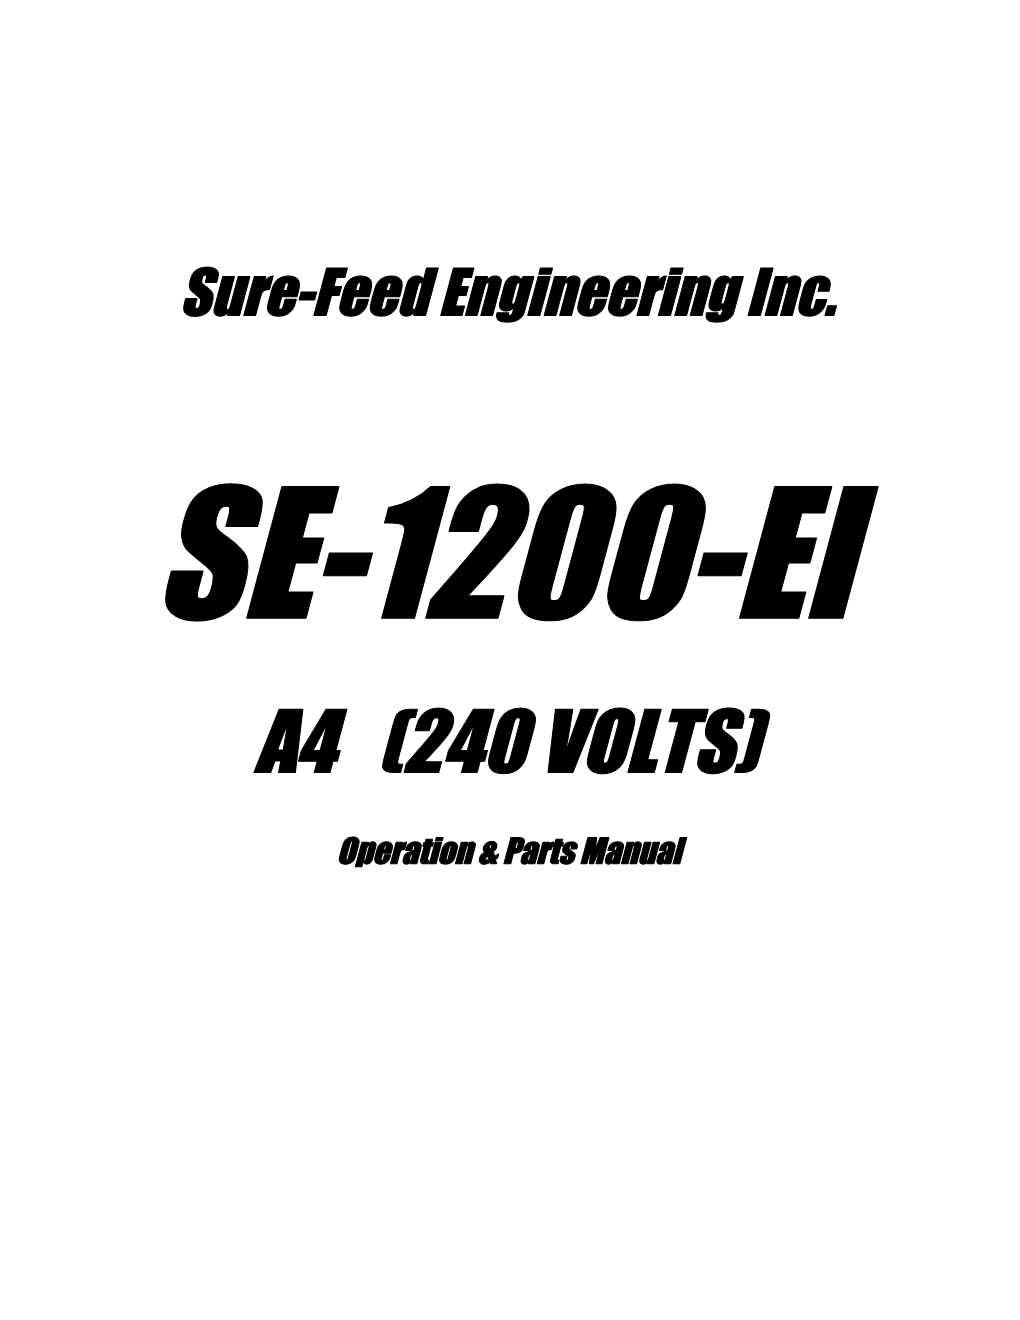 Sure-Feed Engineering Inc